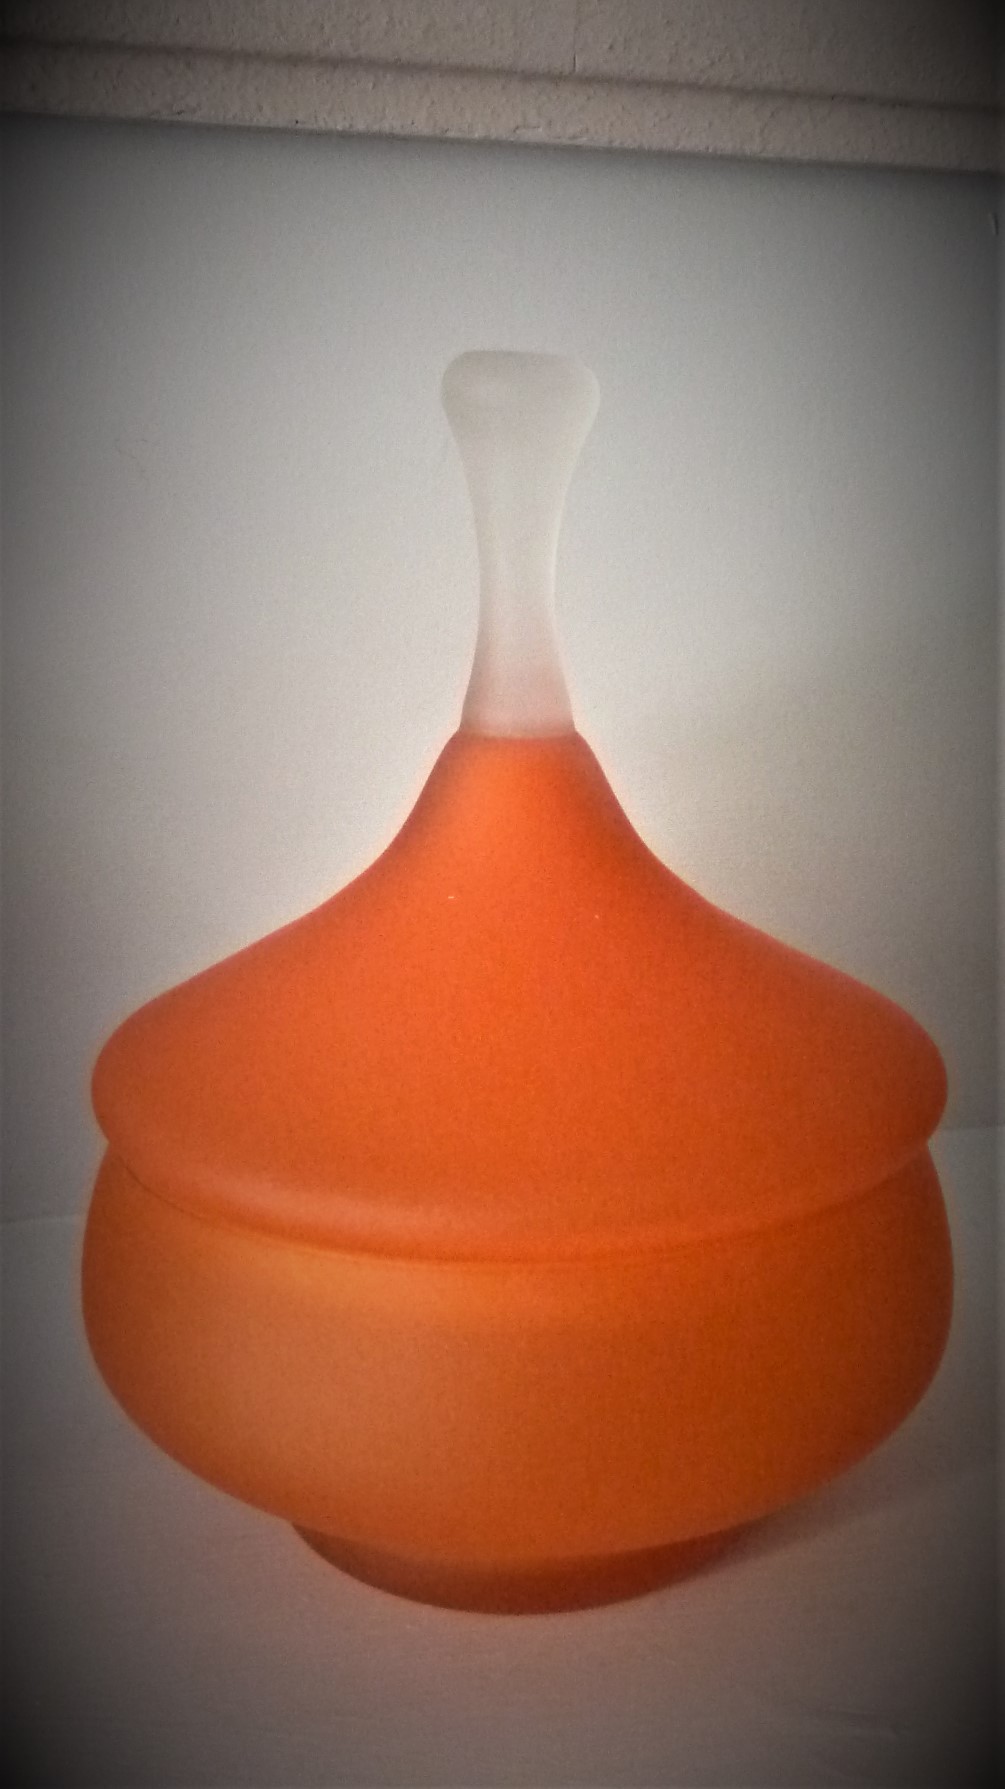  Empoli style lidded Bowl in a vibrant satin finish orange colourway